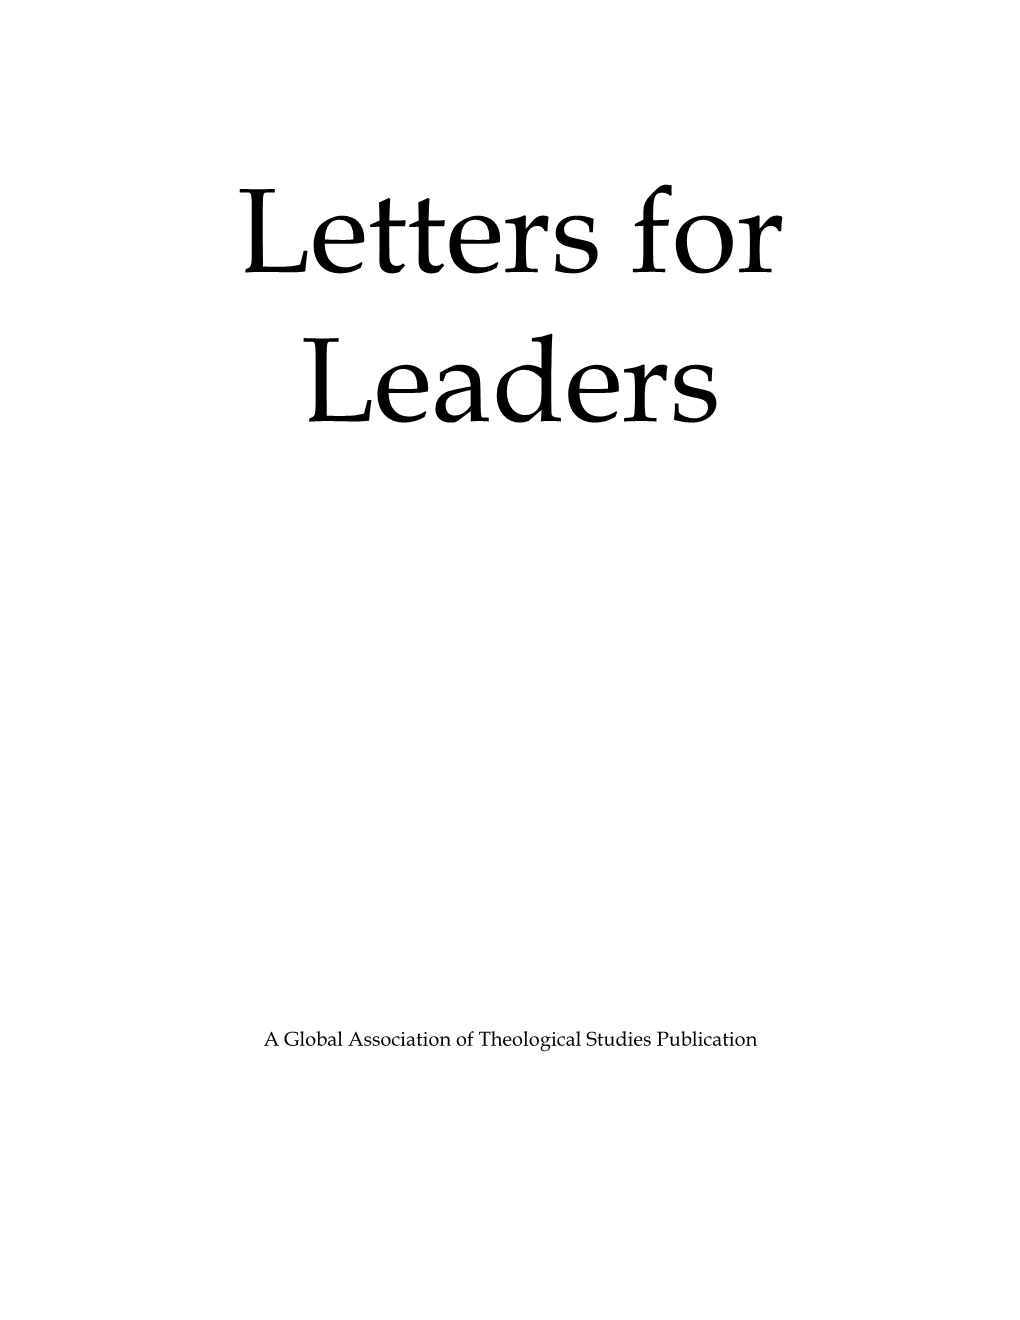 A Global Association of Theological Studies Publication